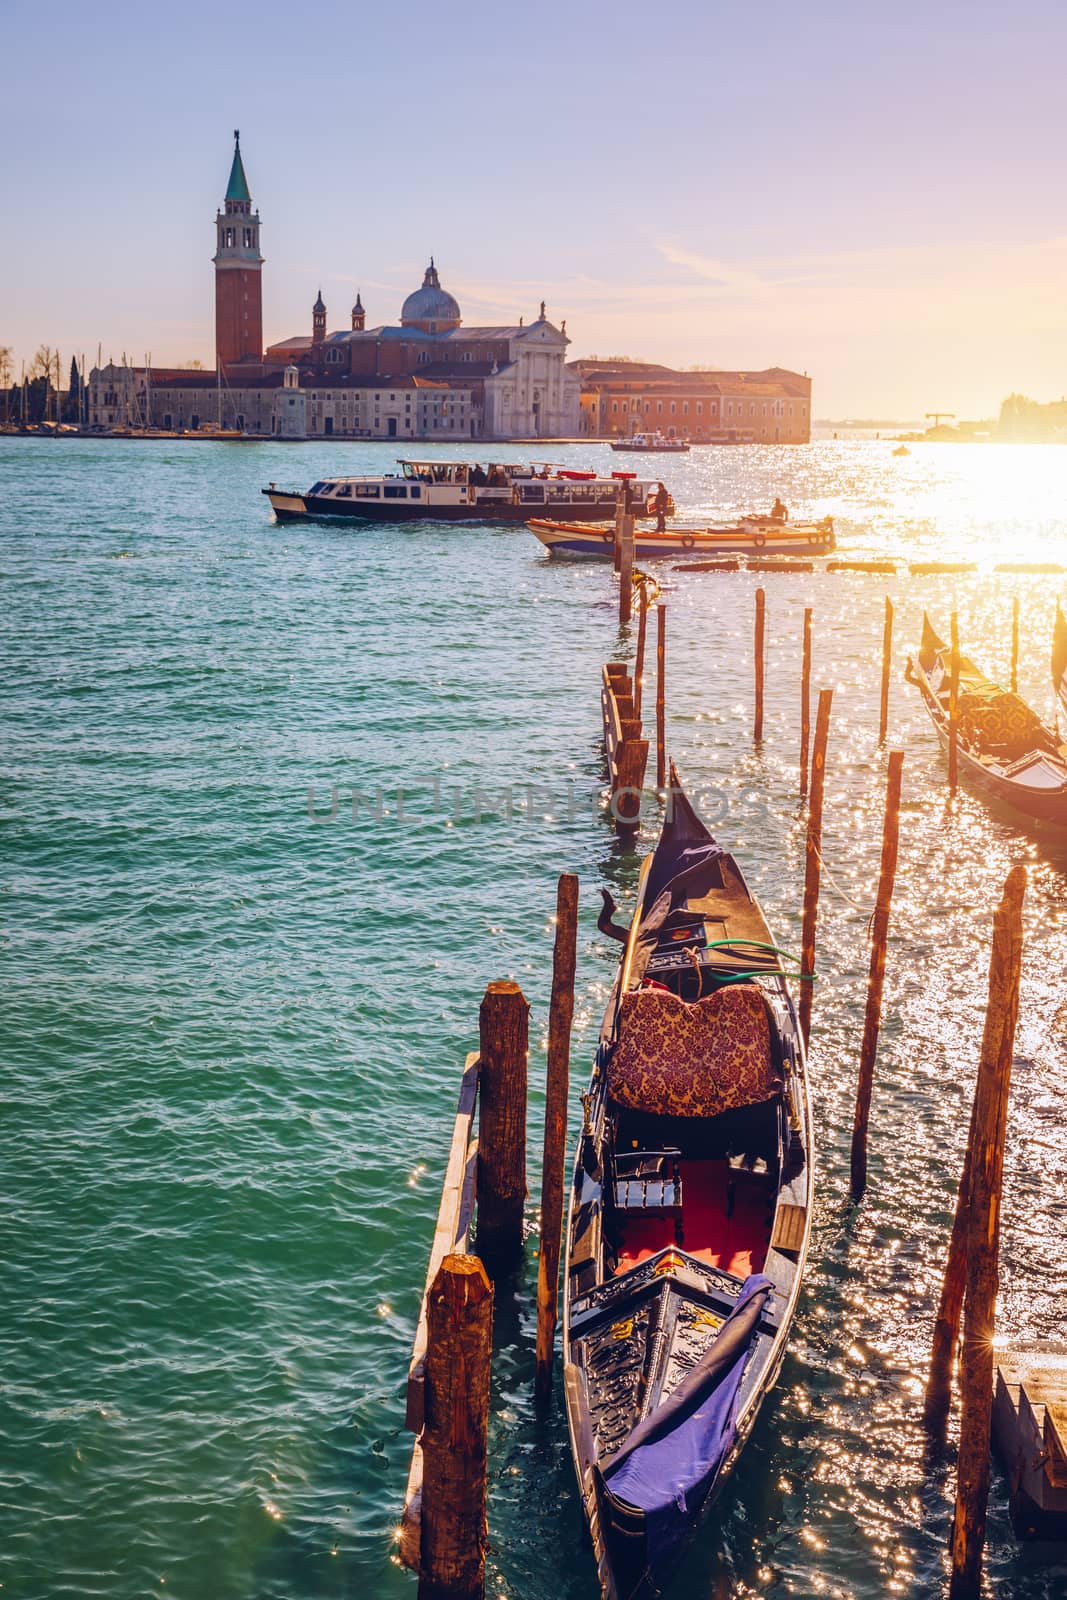 Gondolas moored near San Marco square across from San Giorgio Maggiore island in Venice, Italy. Gondolas were once the main form of transportation around the Venetian canals. Venice, Italy.